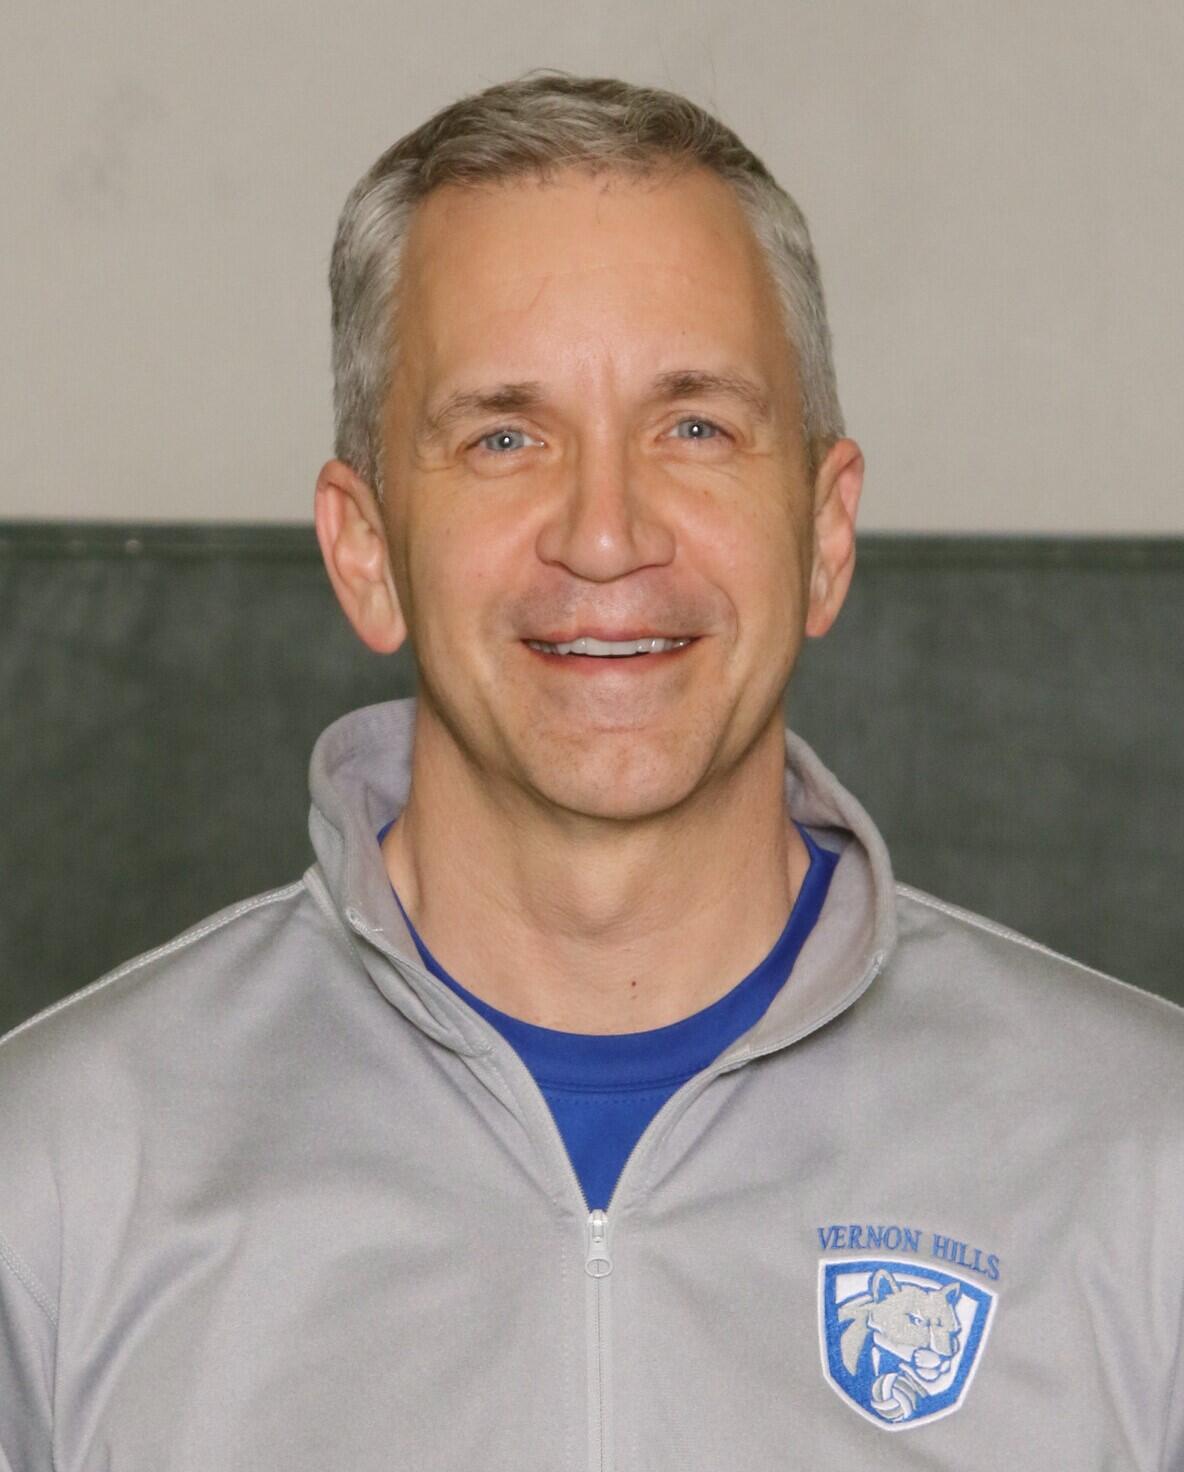 Coach Curry